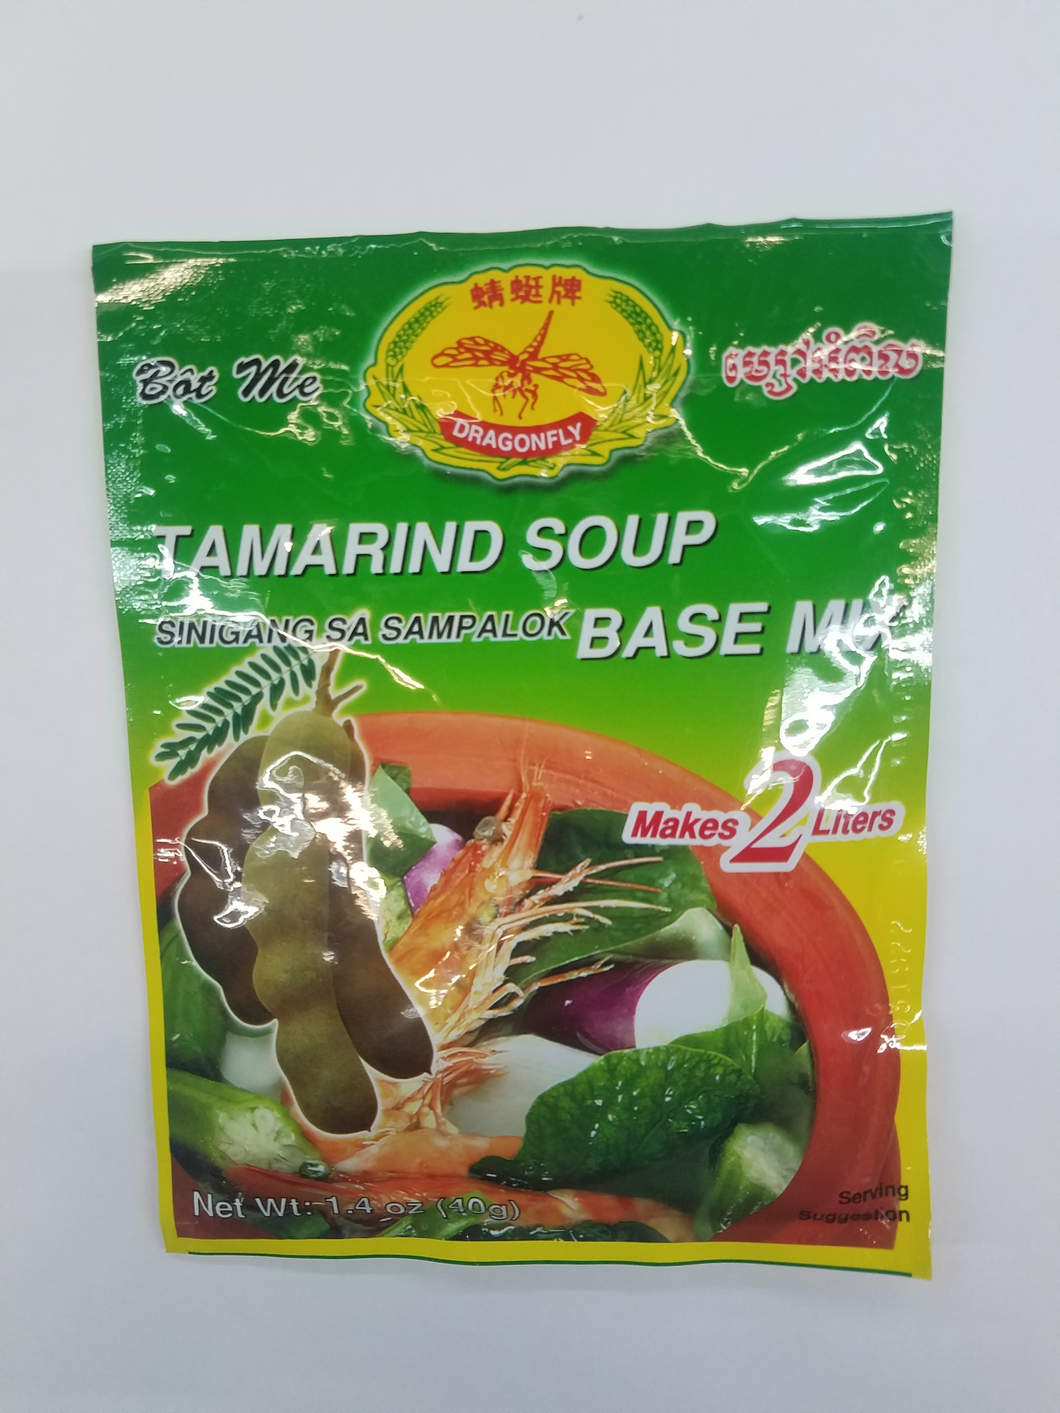 Dragonfly Sinigang Tamarind Soup mix